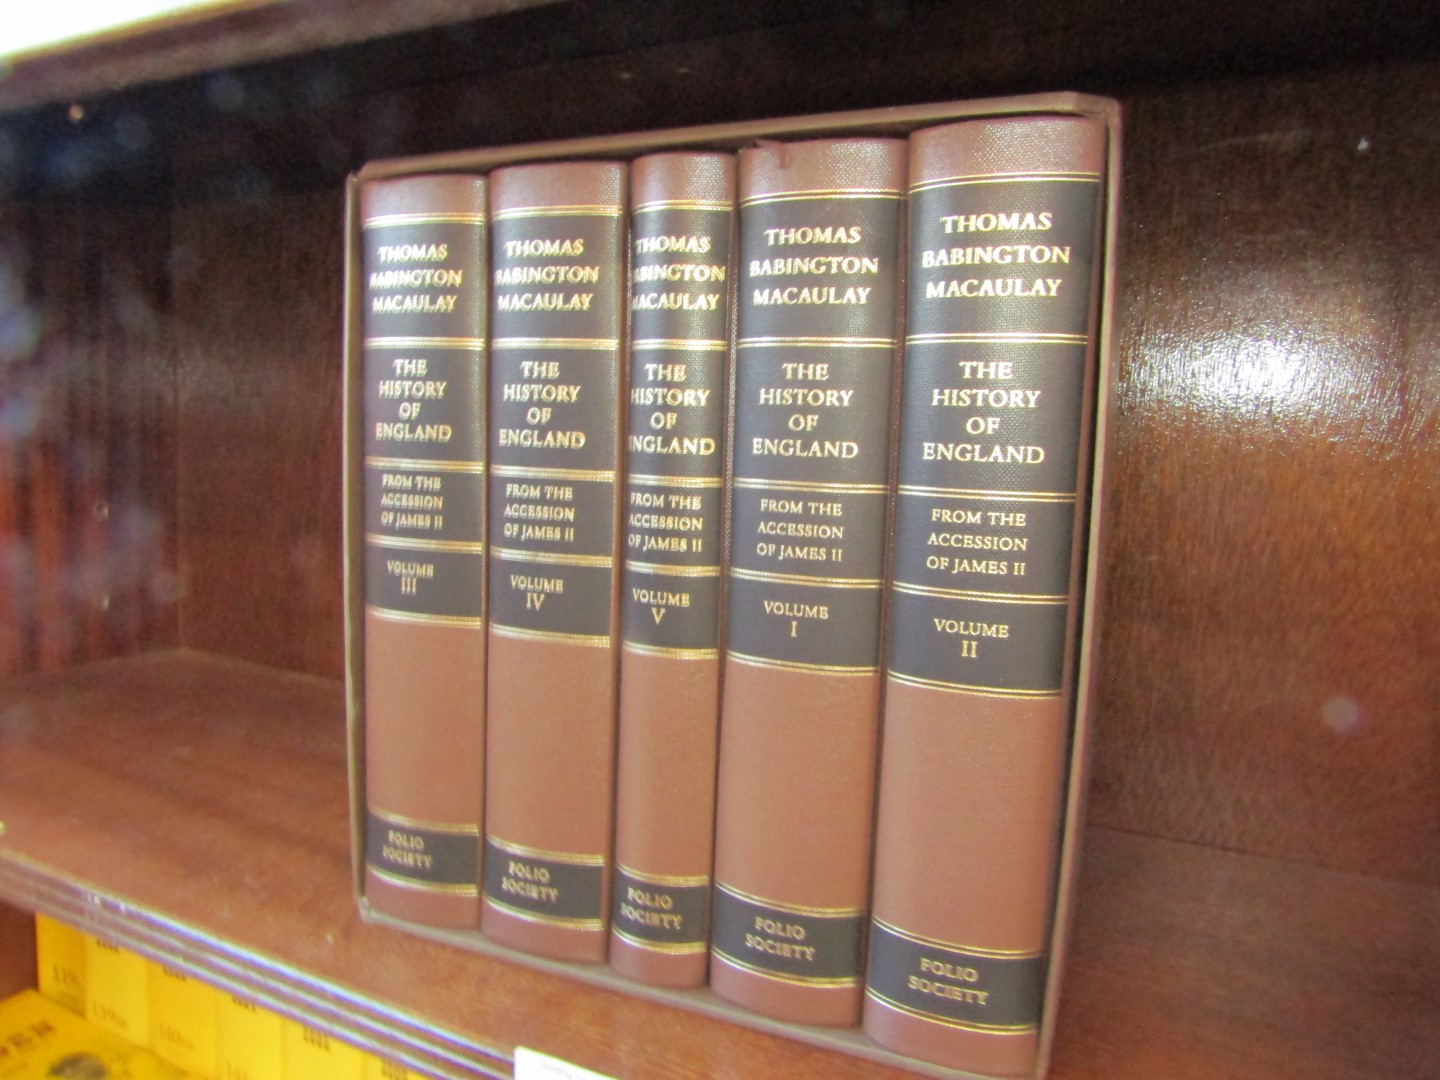 Babington Macaulay (Thomas). The History of England, volumes 1-5, published by The Folio Society, in